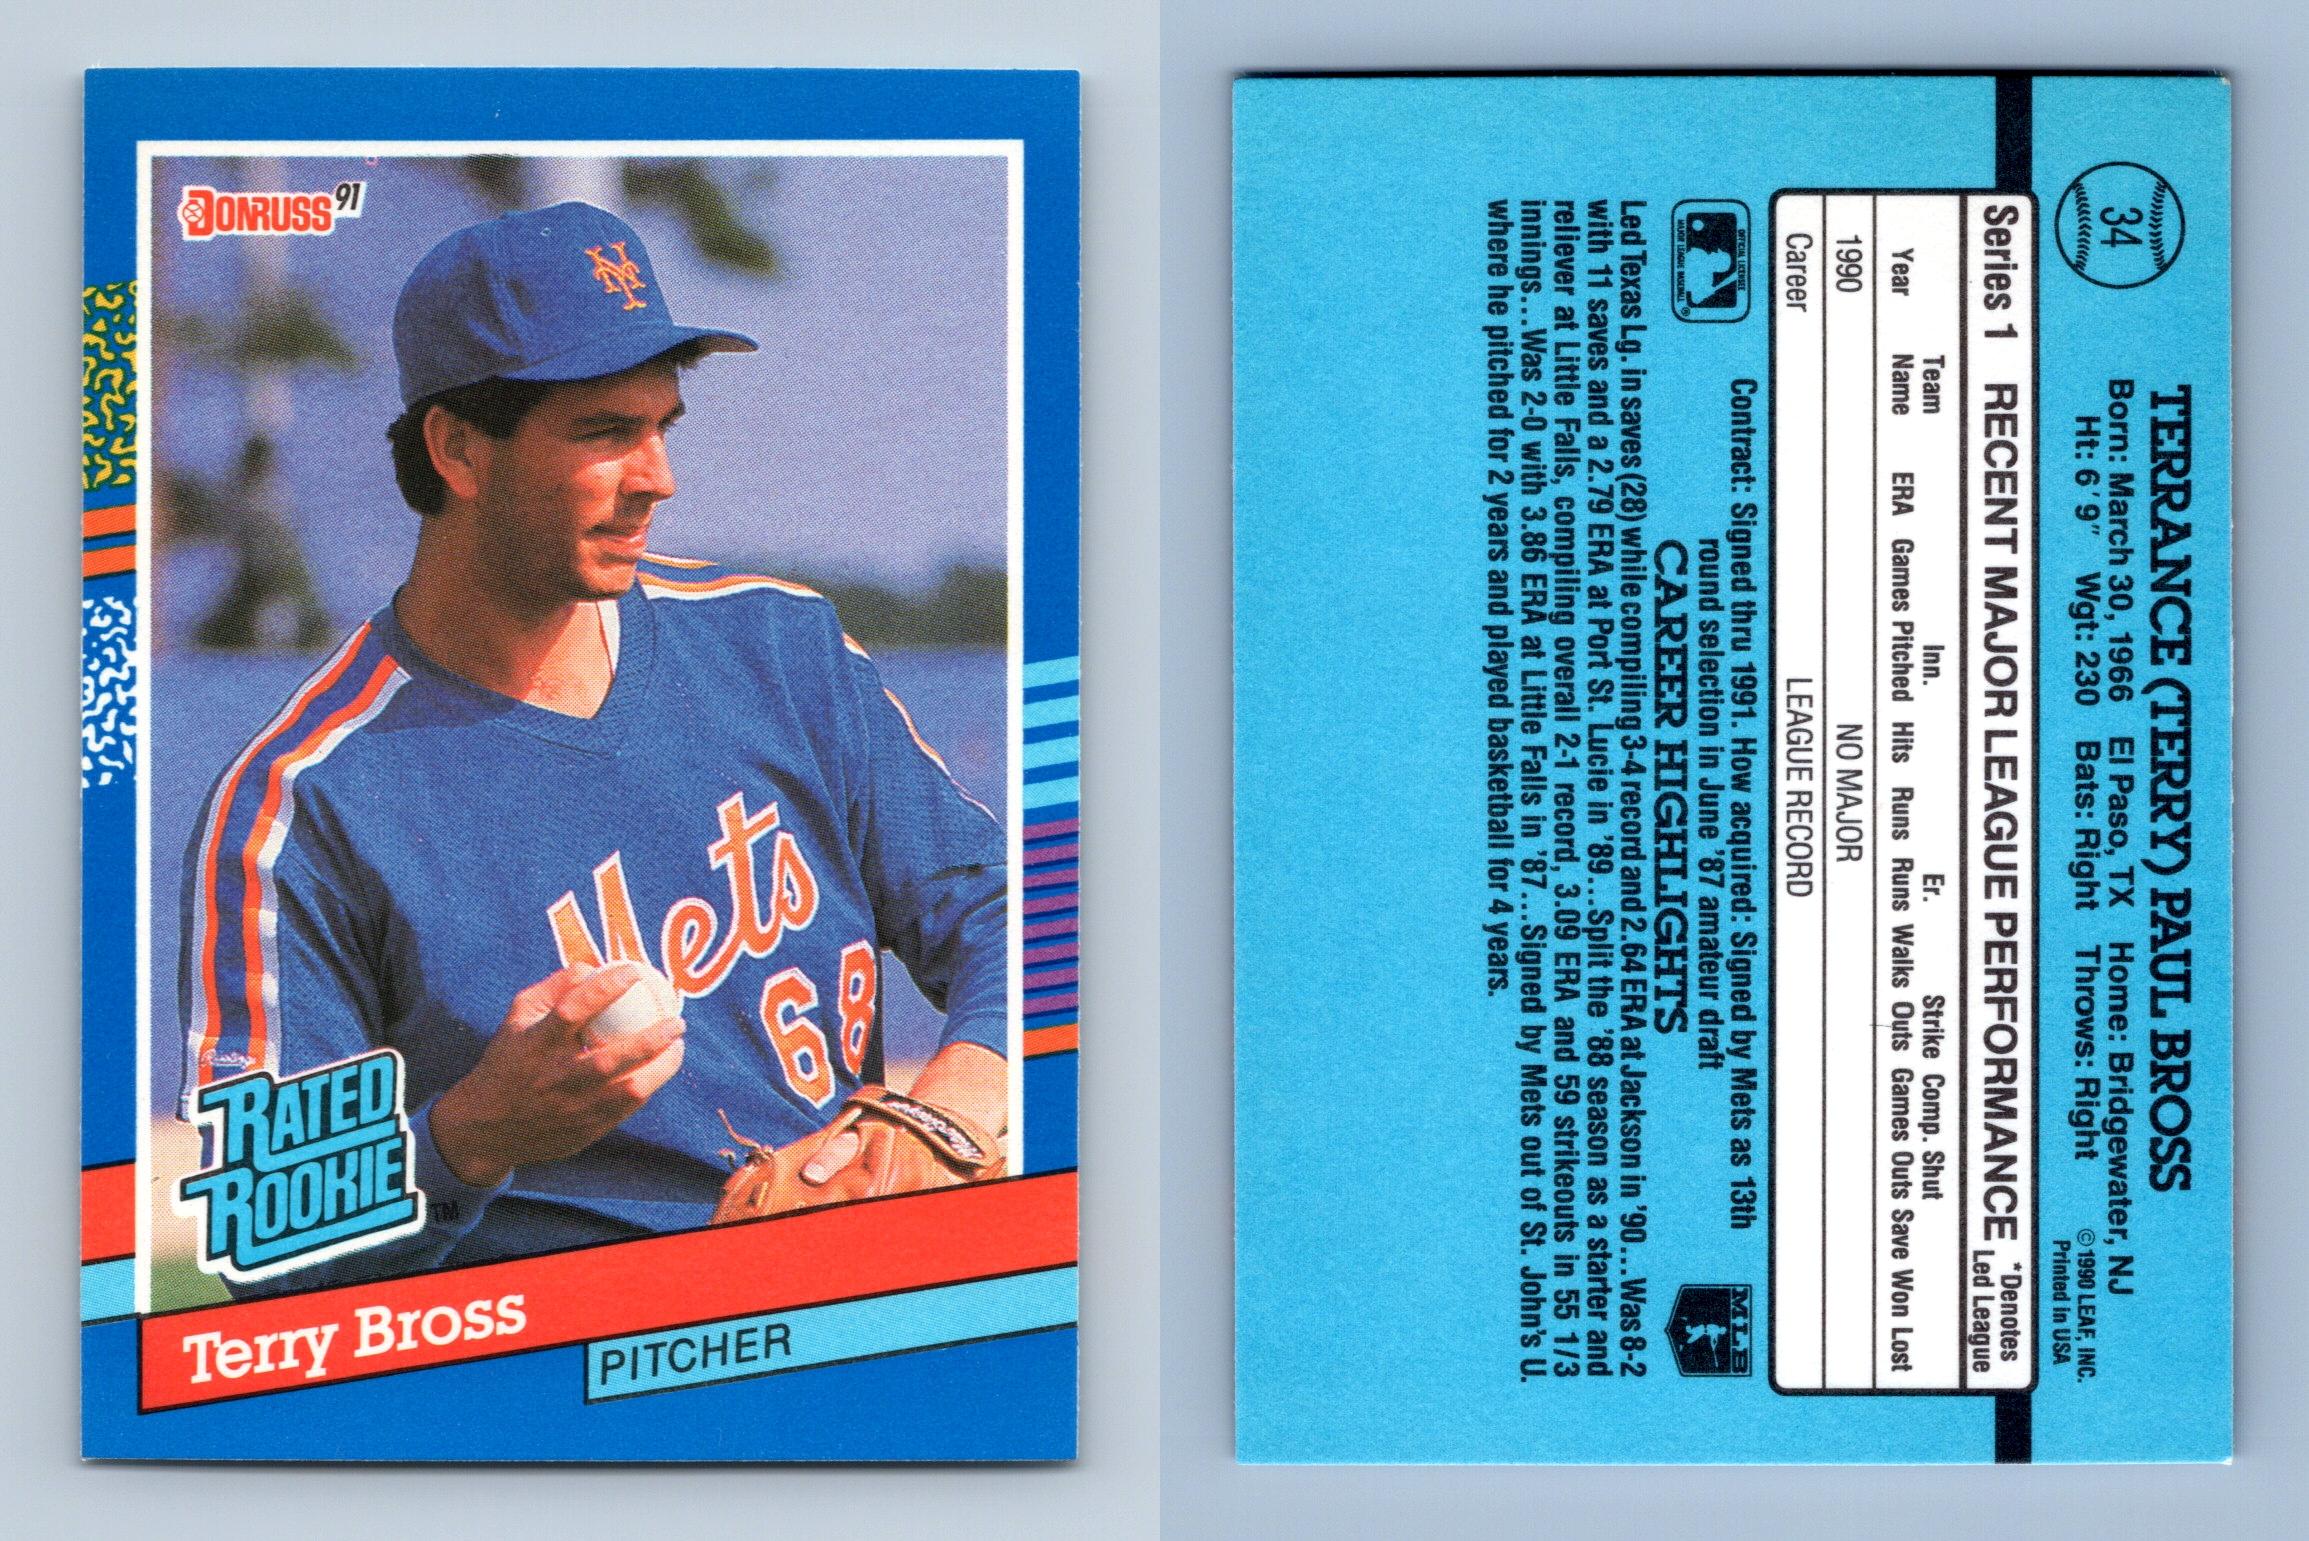  1991 Donruss Baseball Card #430 Mo Vaughn